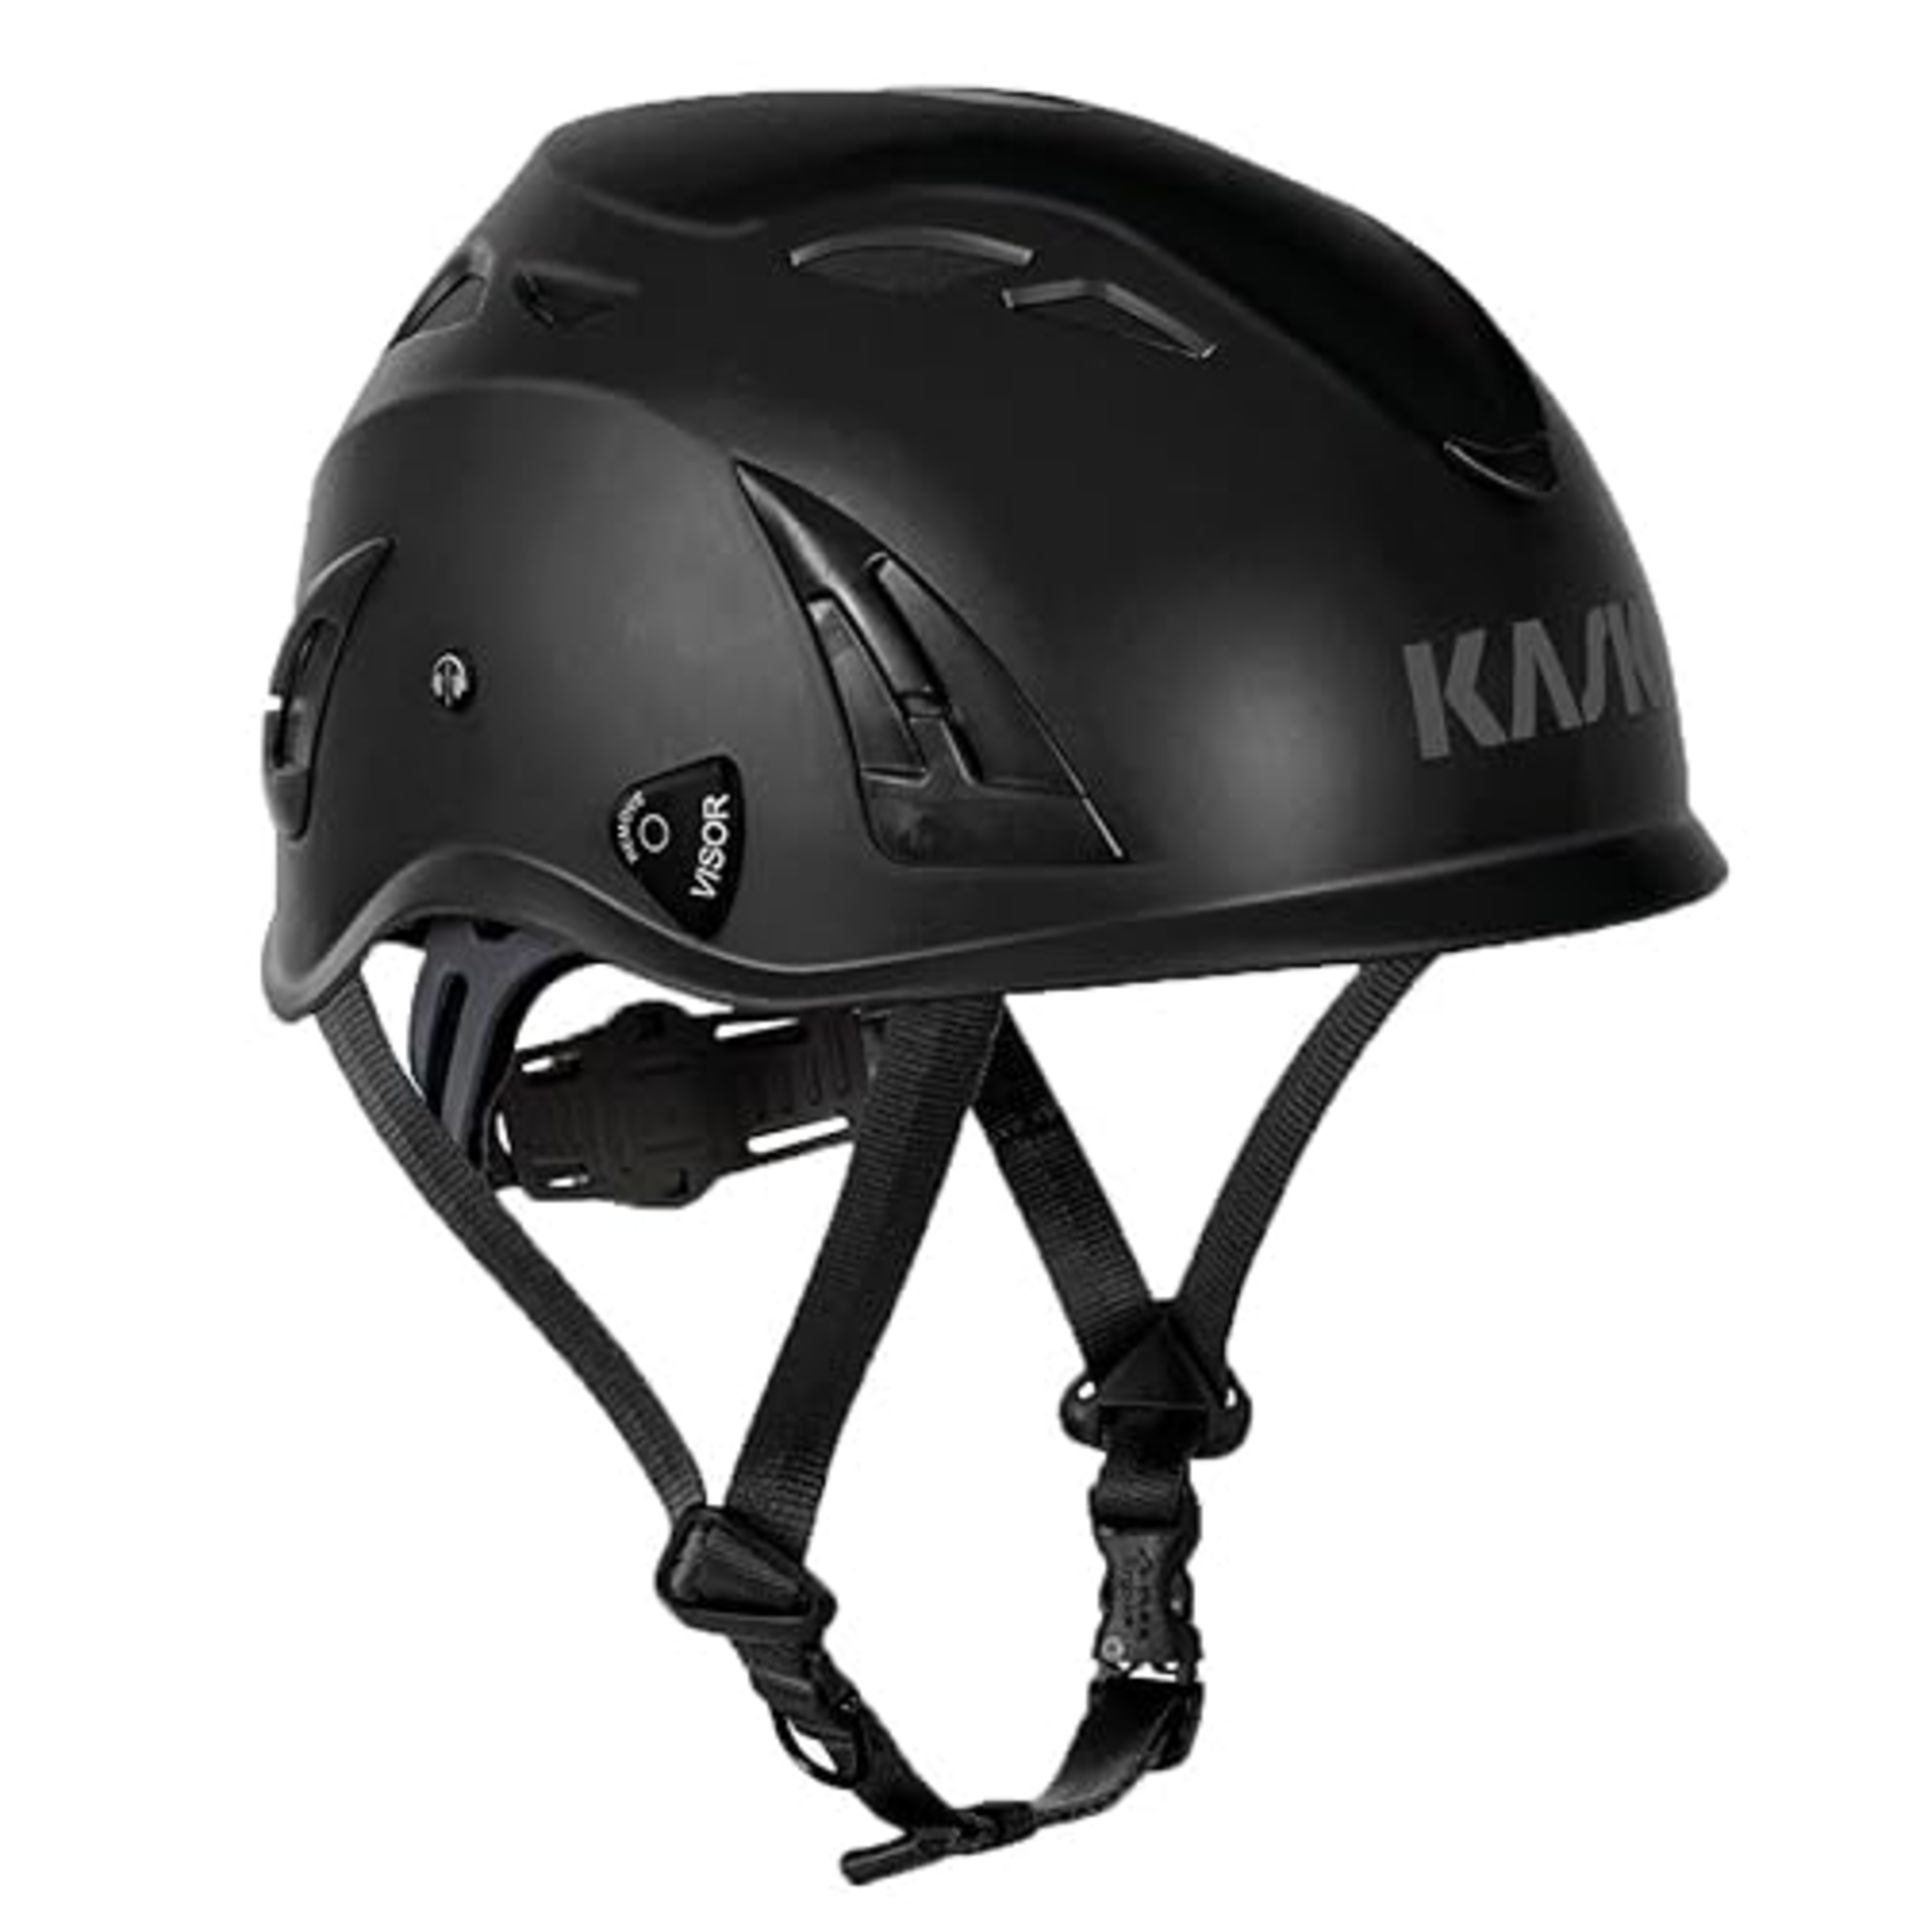 Kask WHE00008-210 Size 51-63 cm "Plasma Aq" Helmet - Black